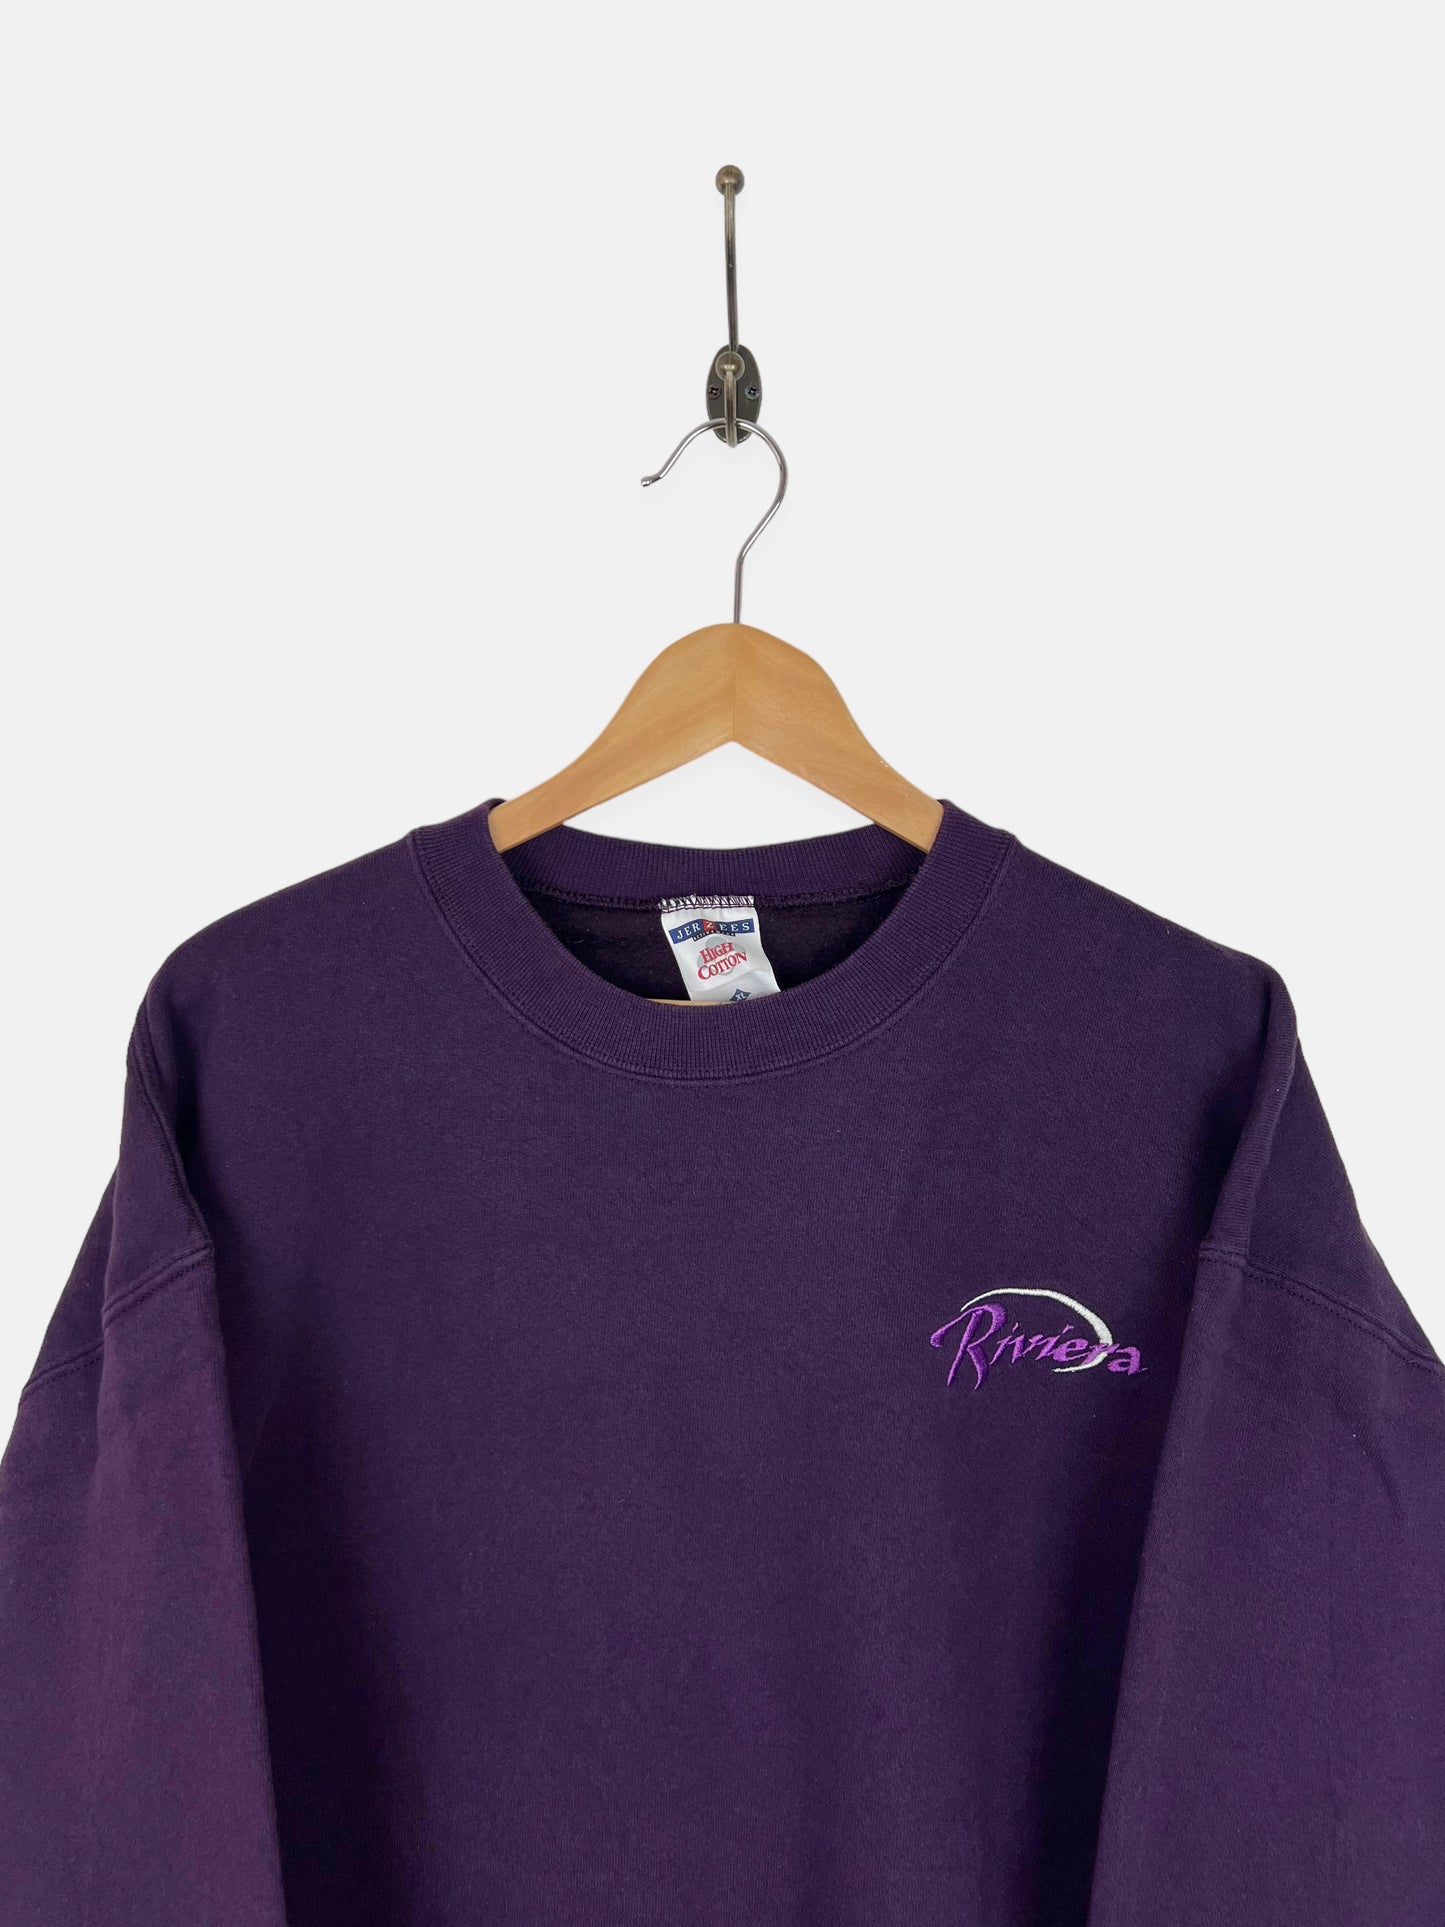 90's Riviera USA Made Embroidered Vintage Sweatshirt Size L-XL